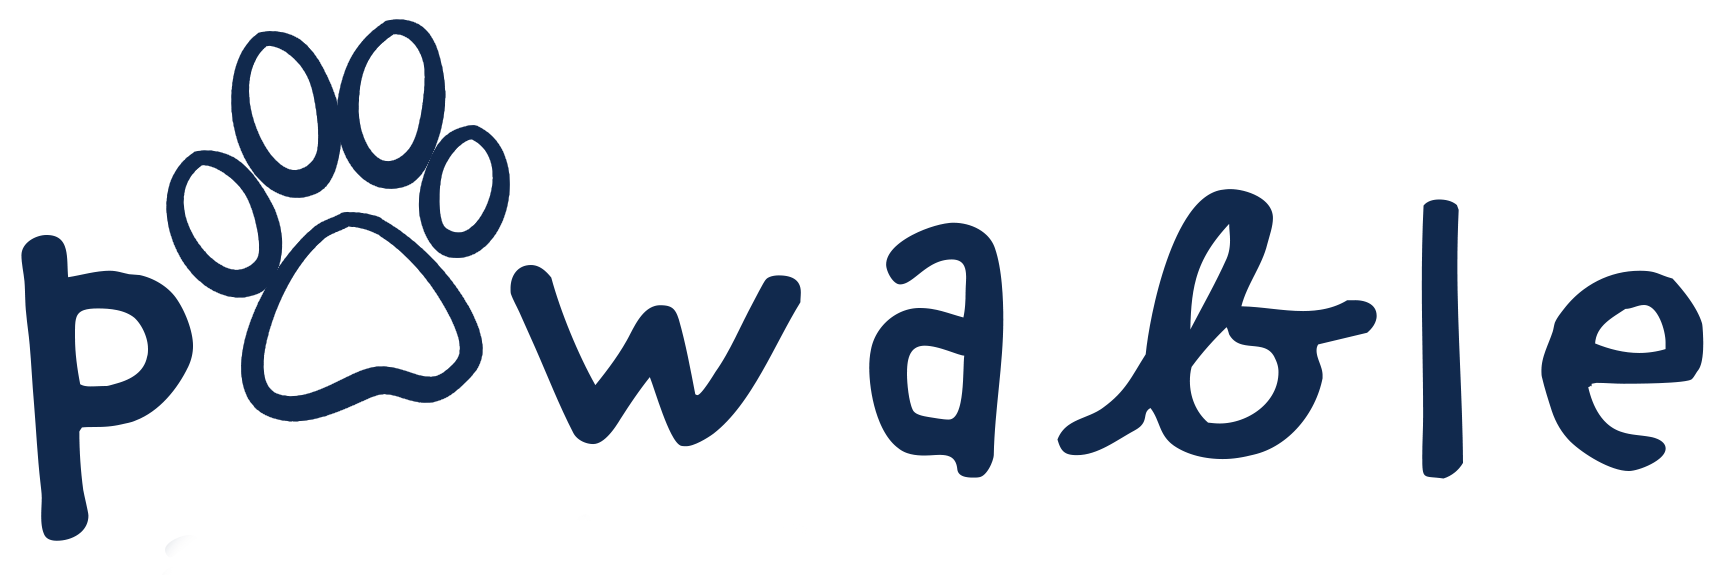 Pawable Help logo